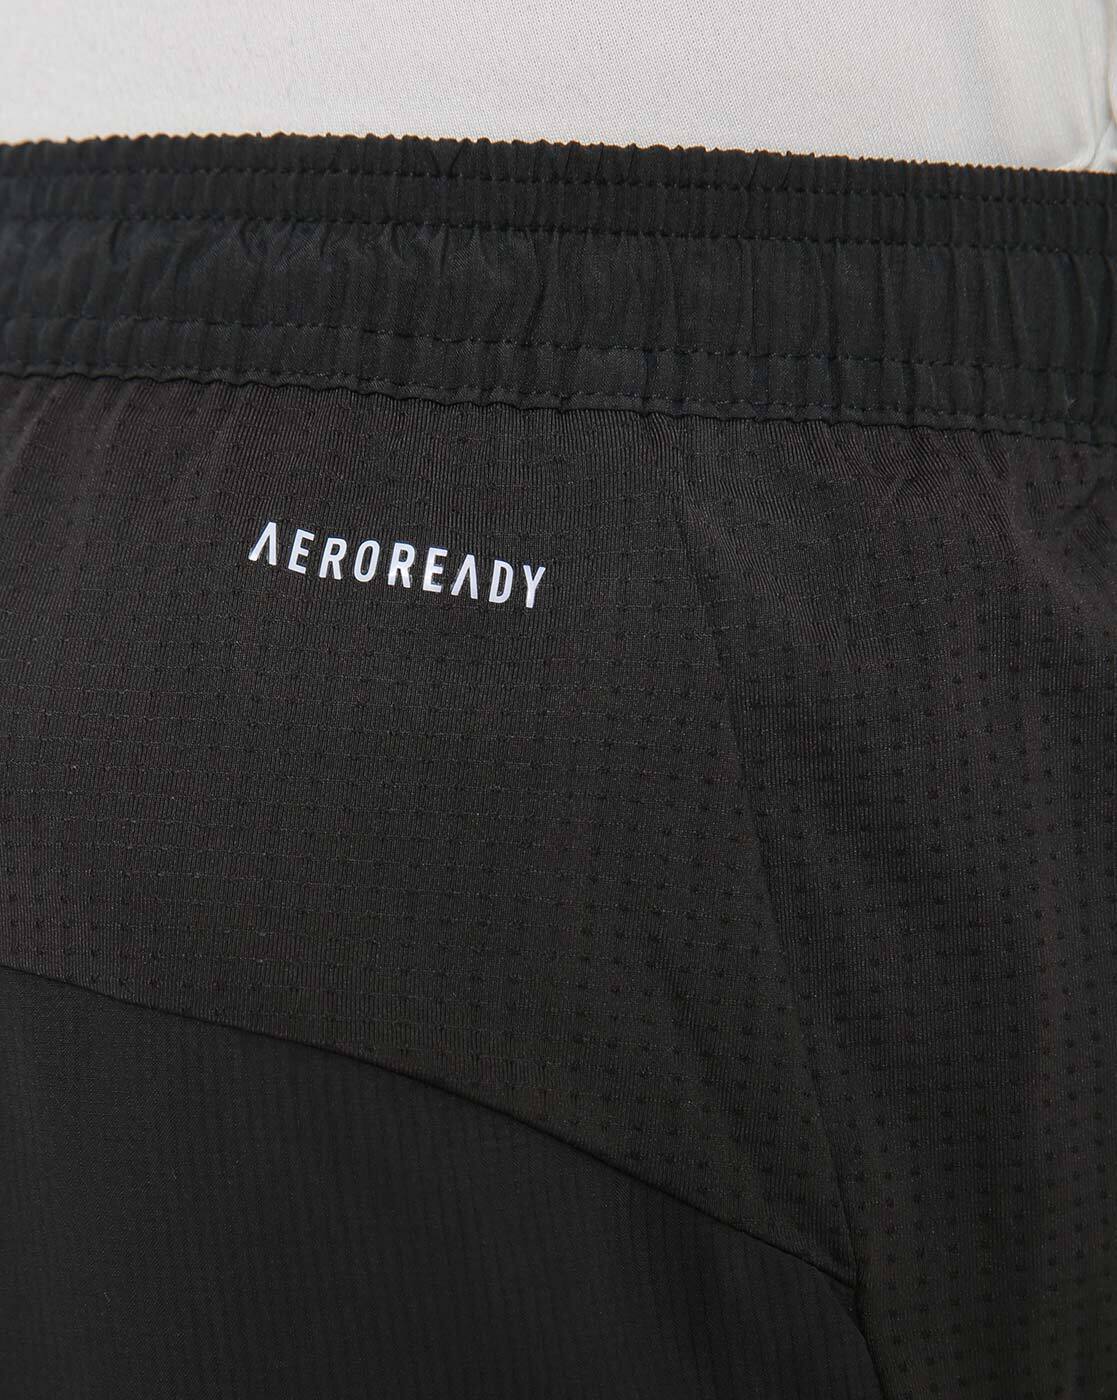 Brand Print Knit Shorts with Insert Pockets-Hc3876